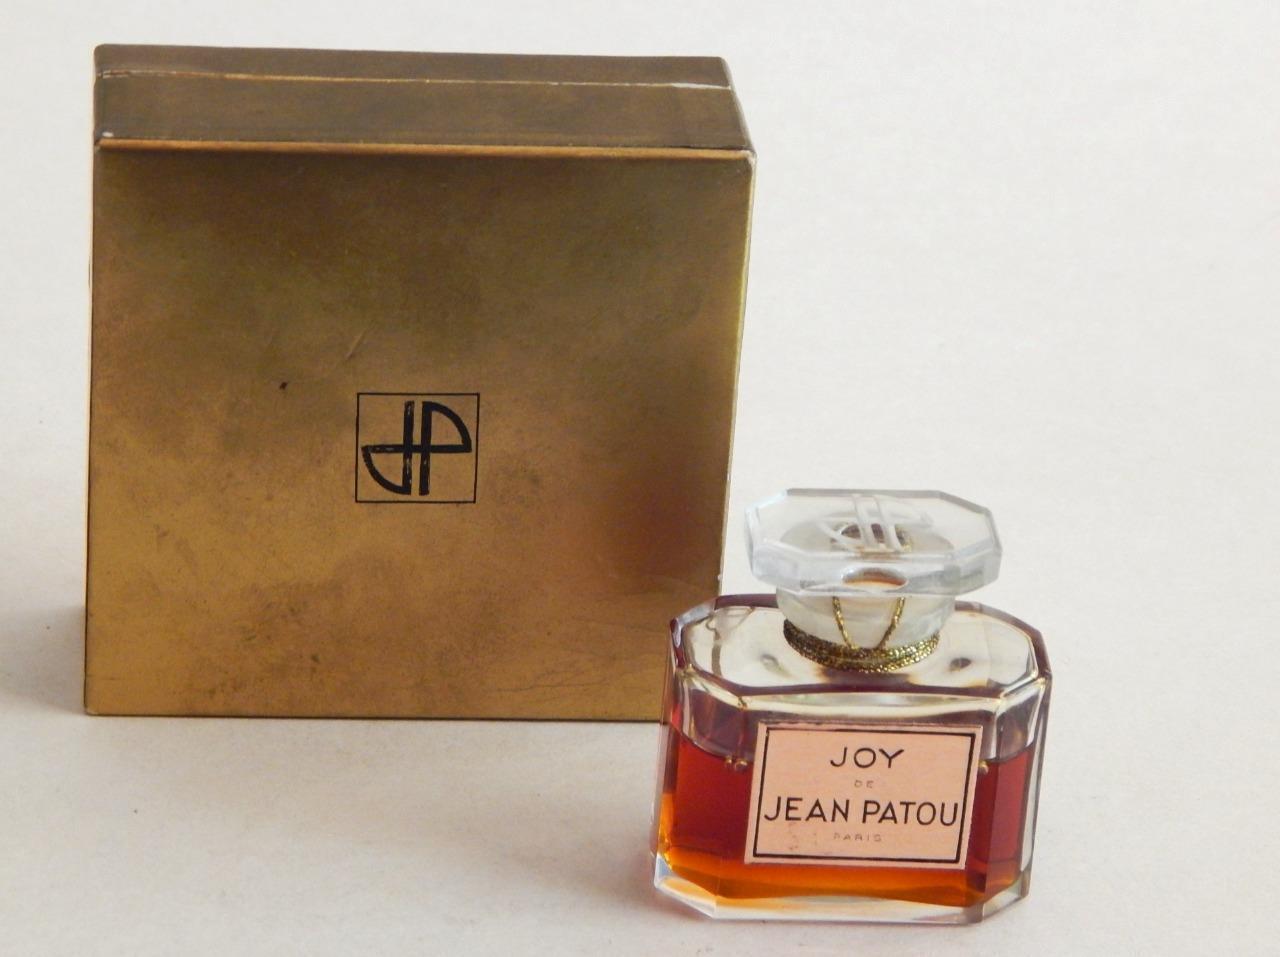 Vintage Jean Patou, Joy Perfume Bottle, ¼ Fl Oz, Made in France with Box